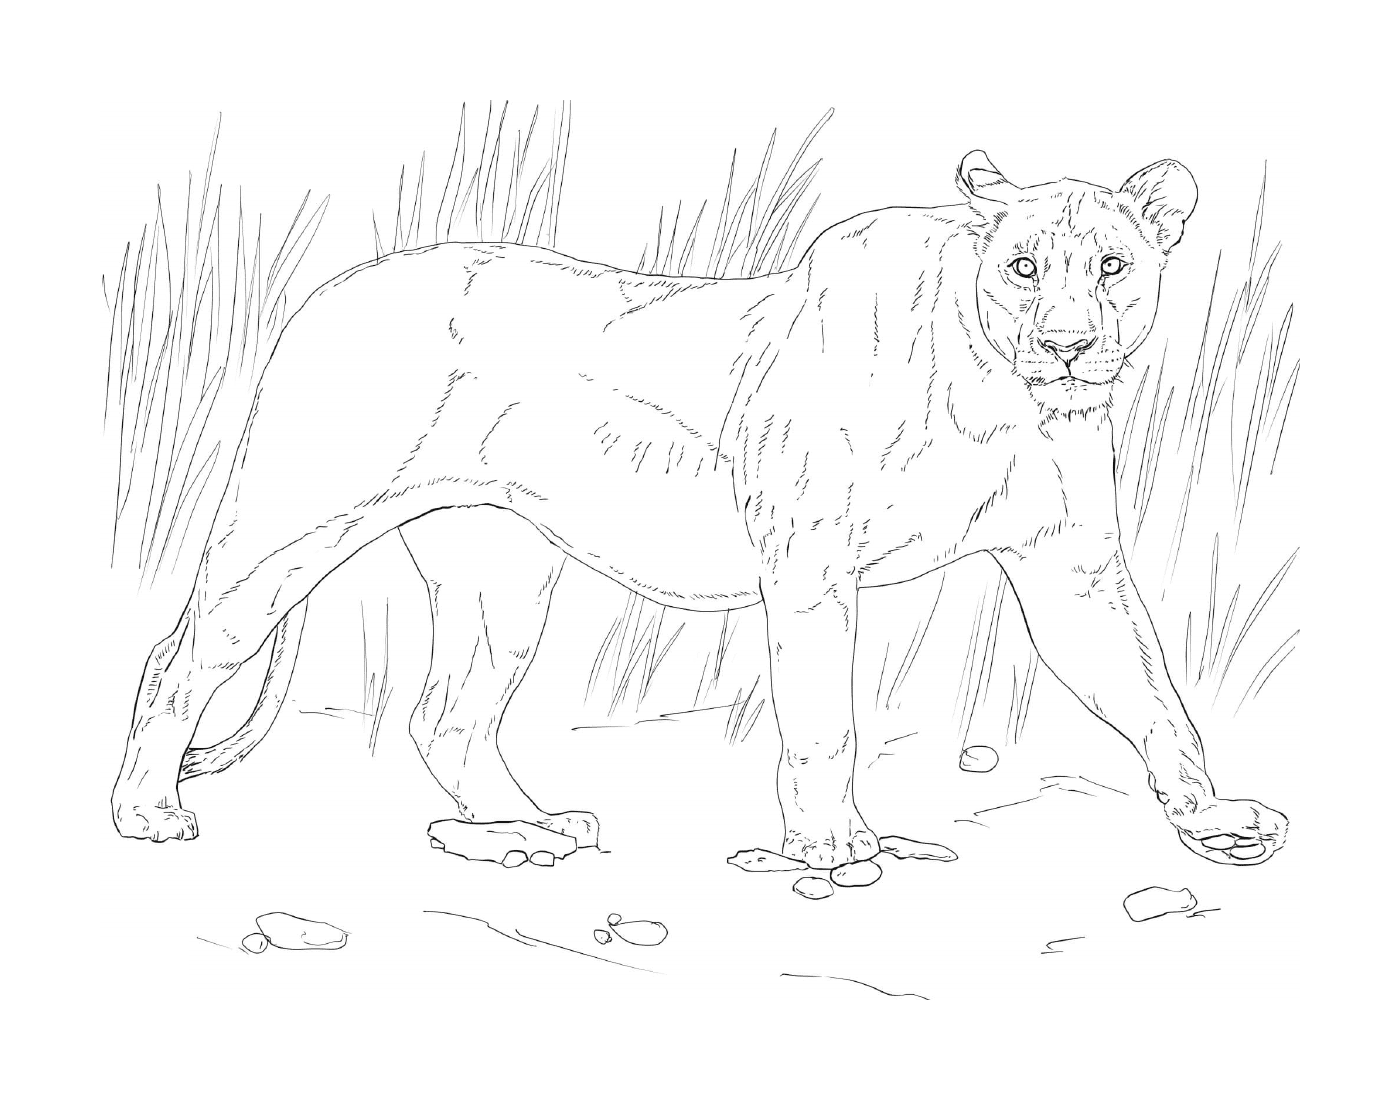  Львица ходит по траве 